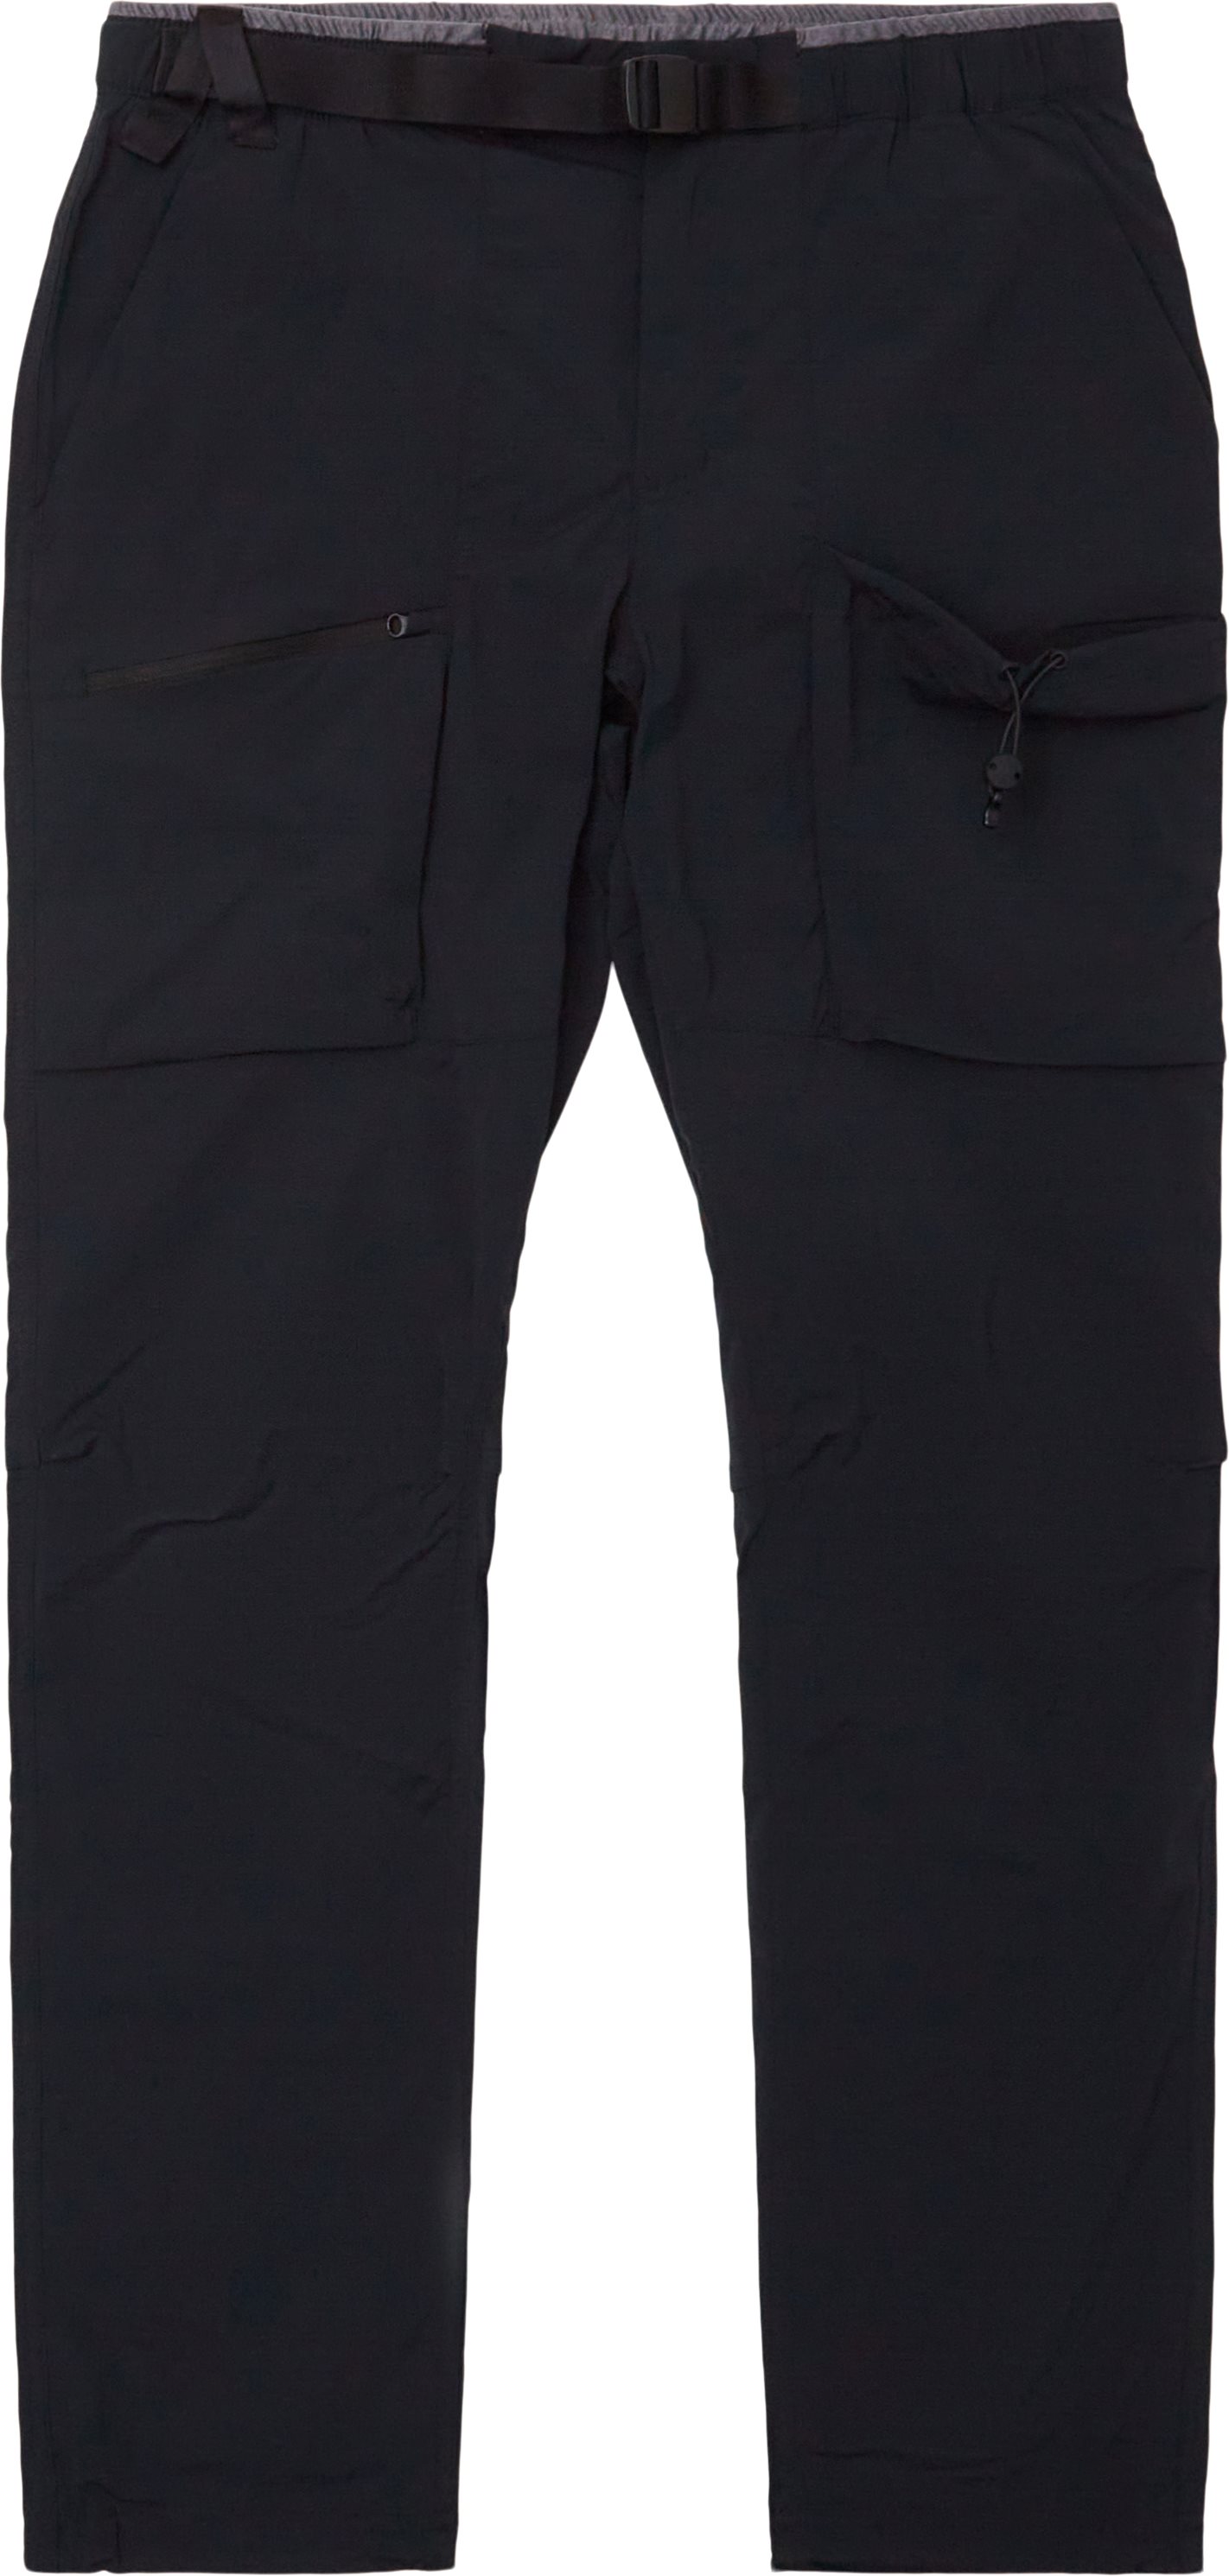 Maxtrail Lite Novelty Pant - Bukser - Regular fit - Sort